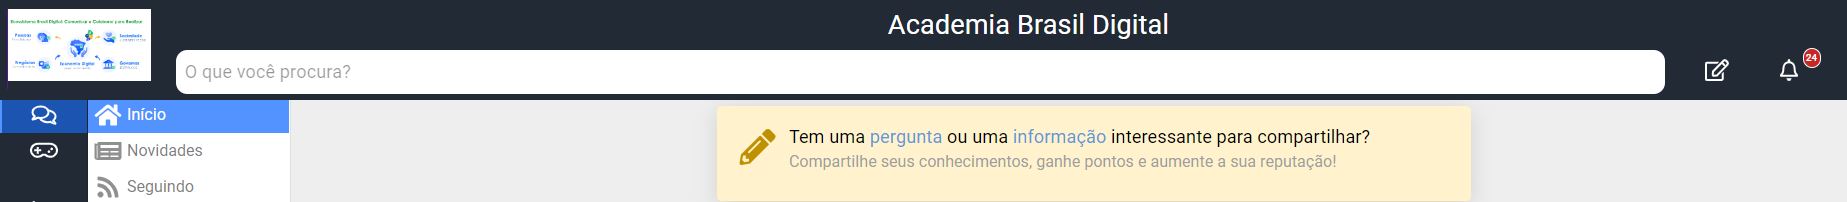 Academia-Brasil-Digital